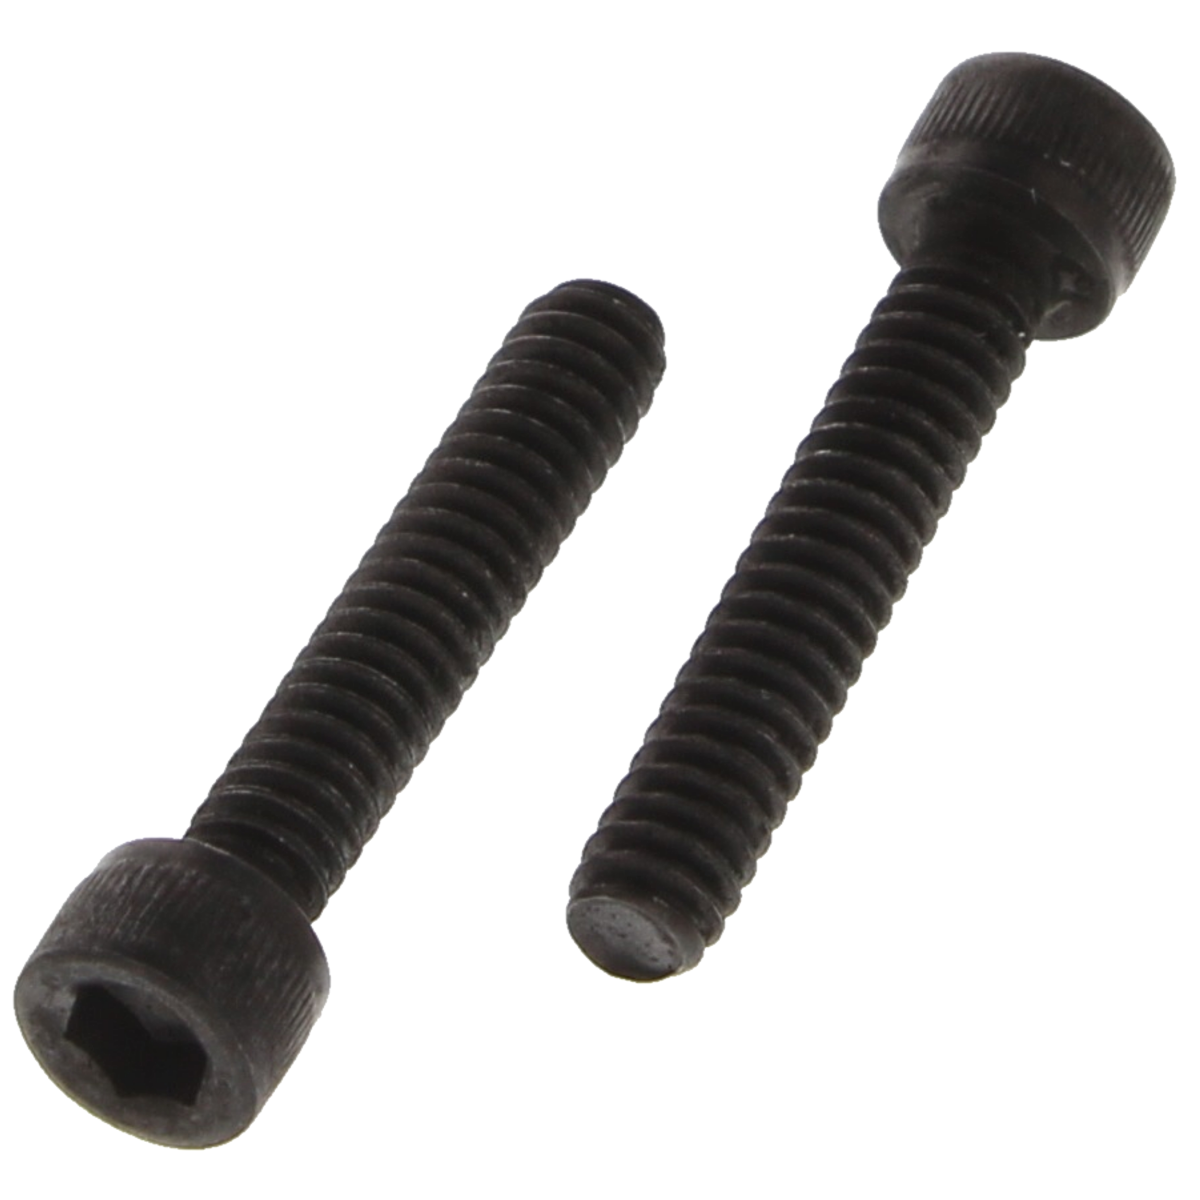 #10-24 x 1" Socket Head Cap Screws — Alloy Steel Heat Treated, Coarse Thread, Black Oxide, 100/PKG